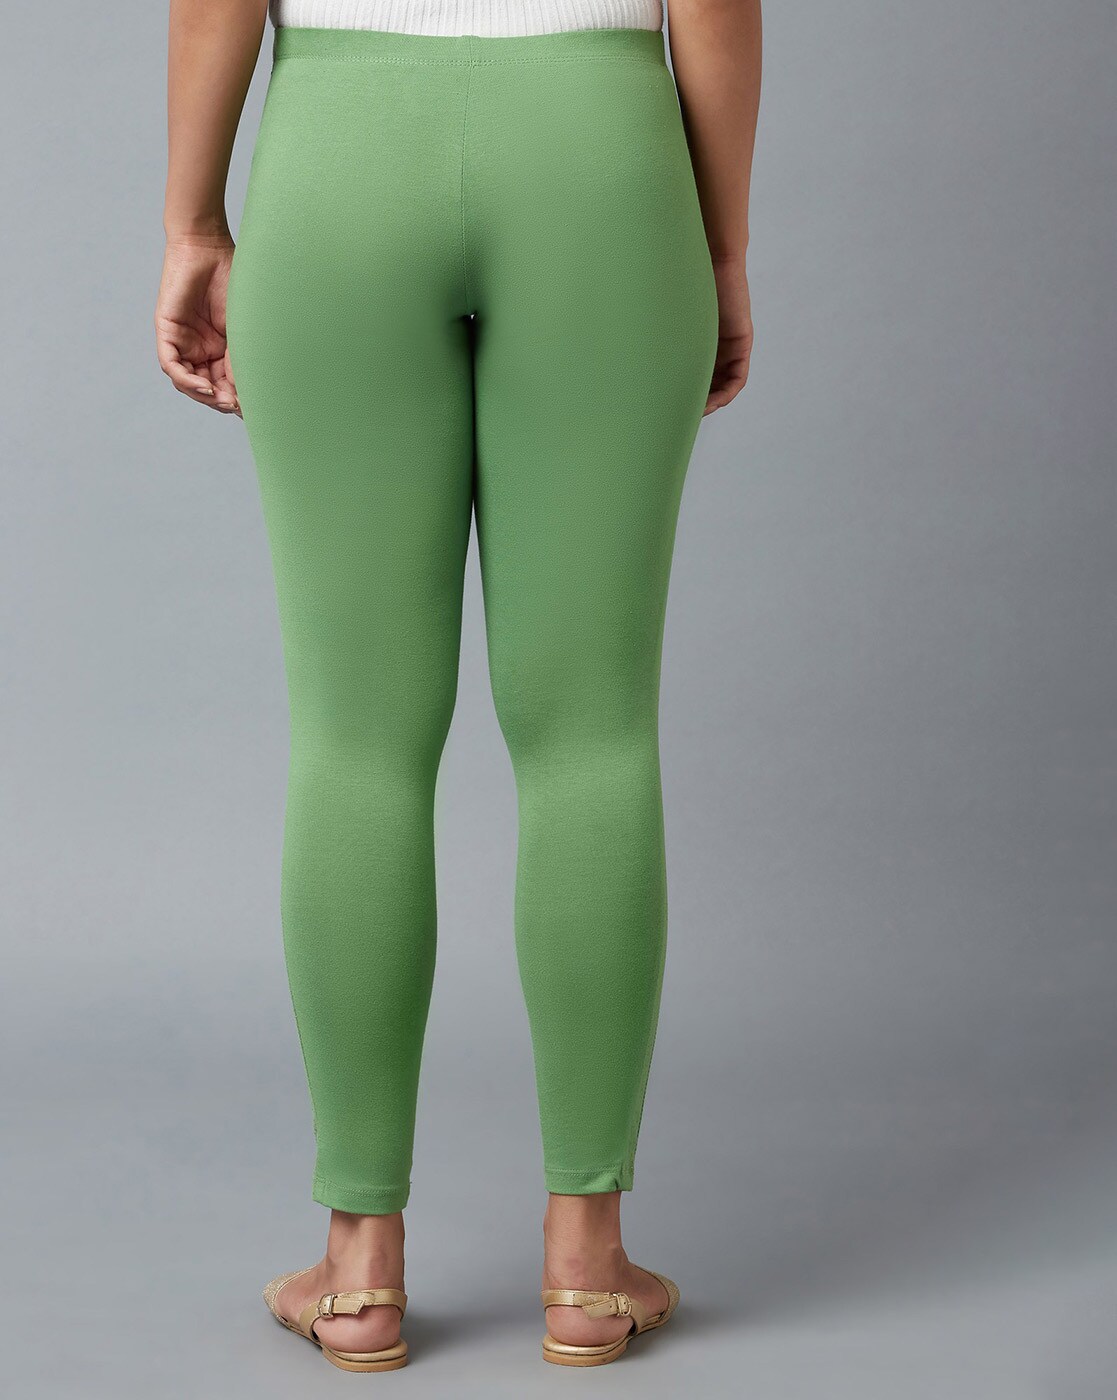 Colorfulkoala Green Soft Leggings - $16 (46% Off Retail) - From Lexi